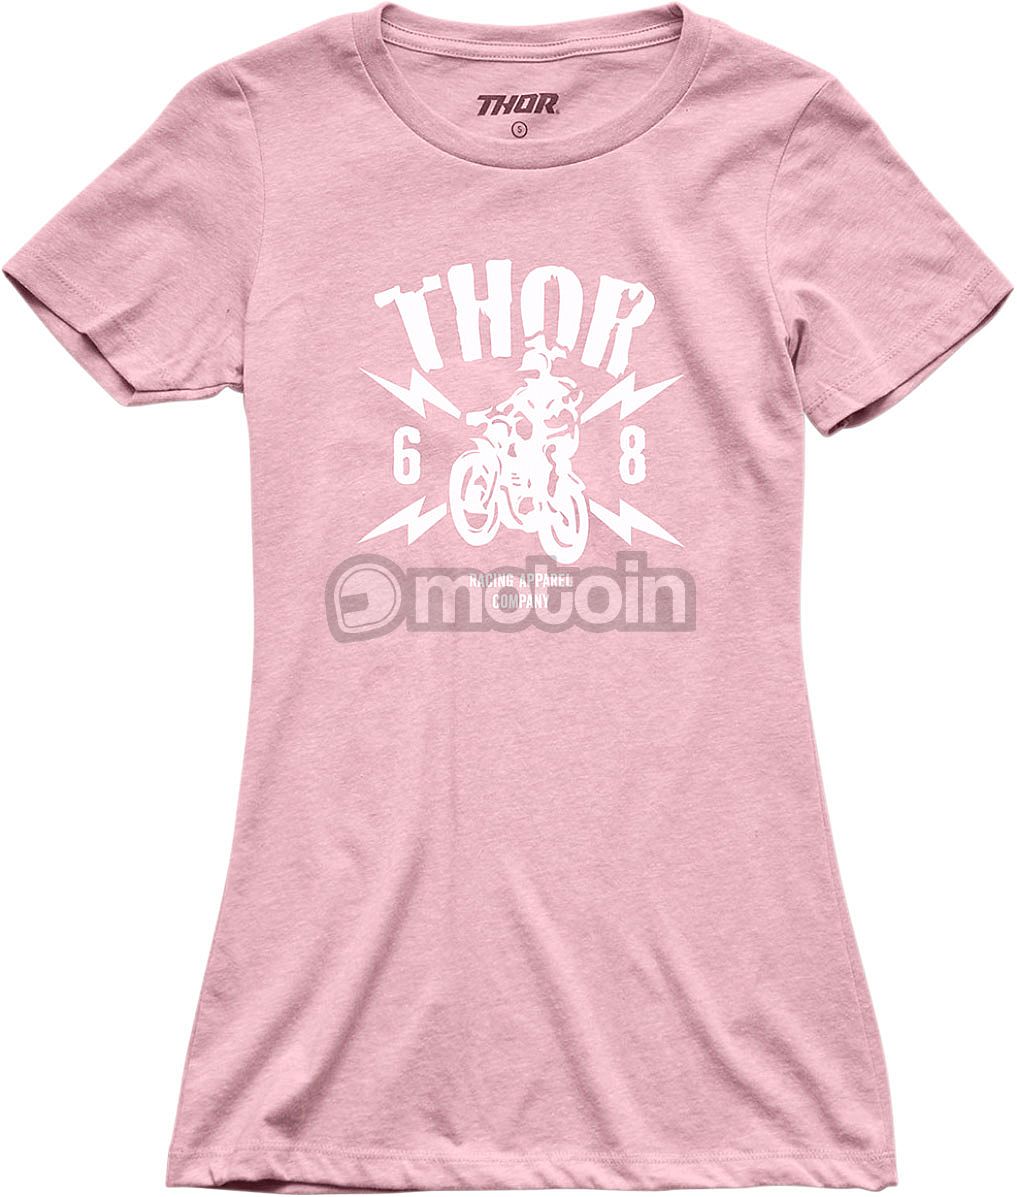 Thor Lightning, t-shirt women